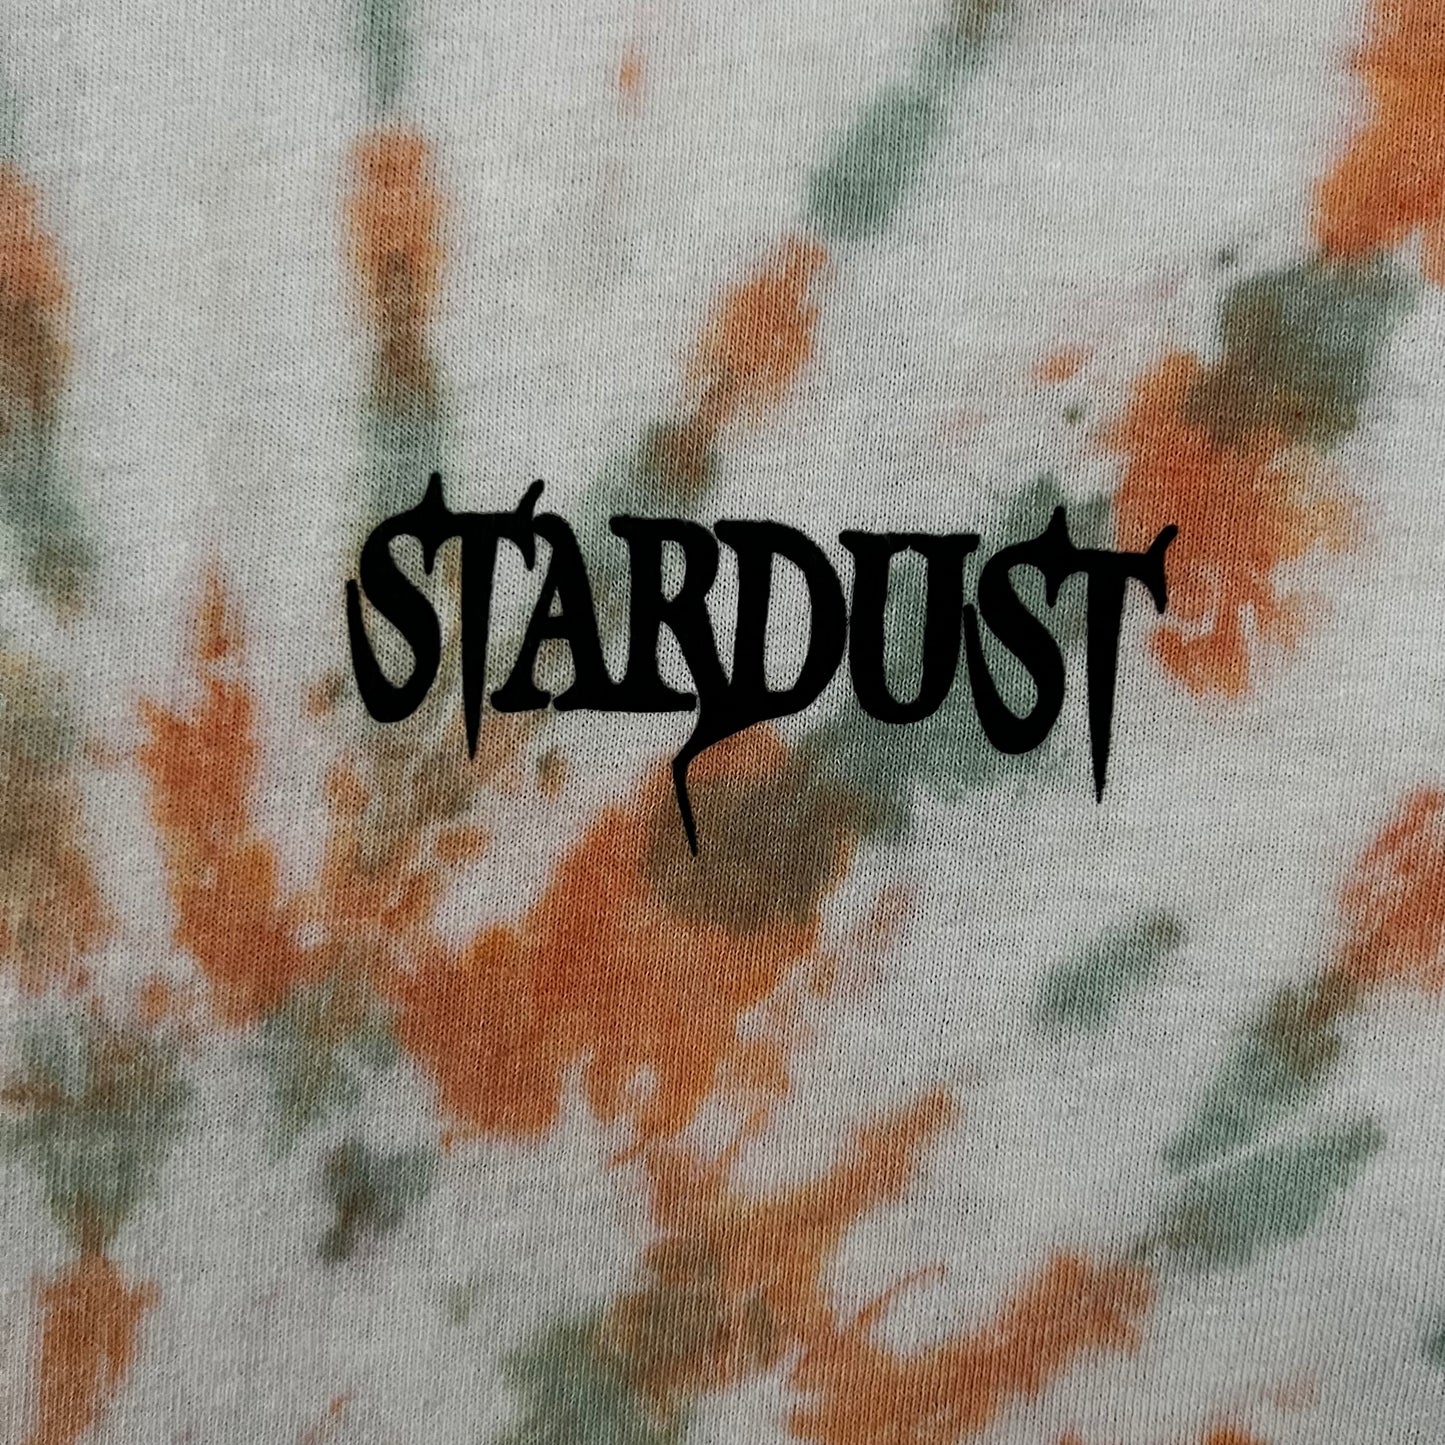 Stardust Global Tee 019 - Small - Tie Dye / Black 